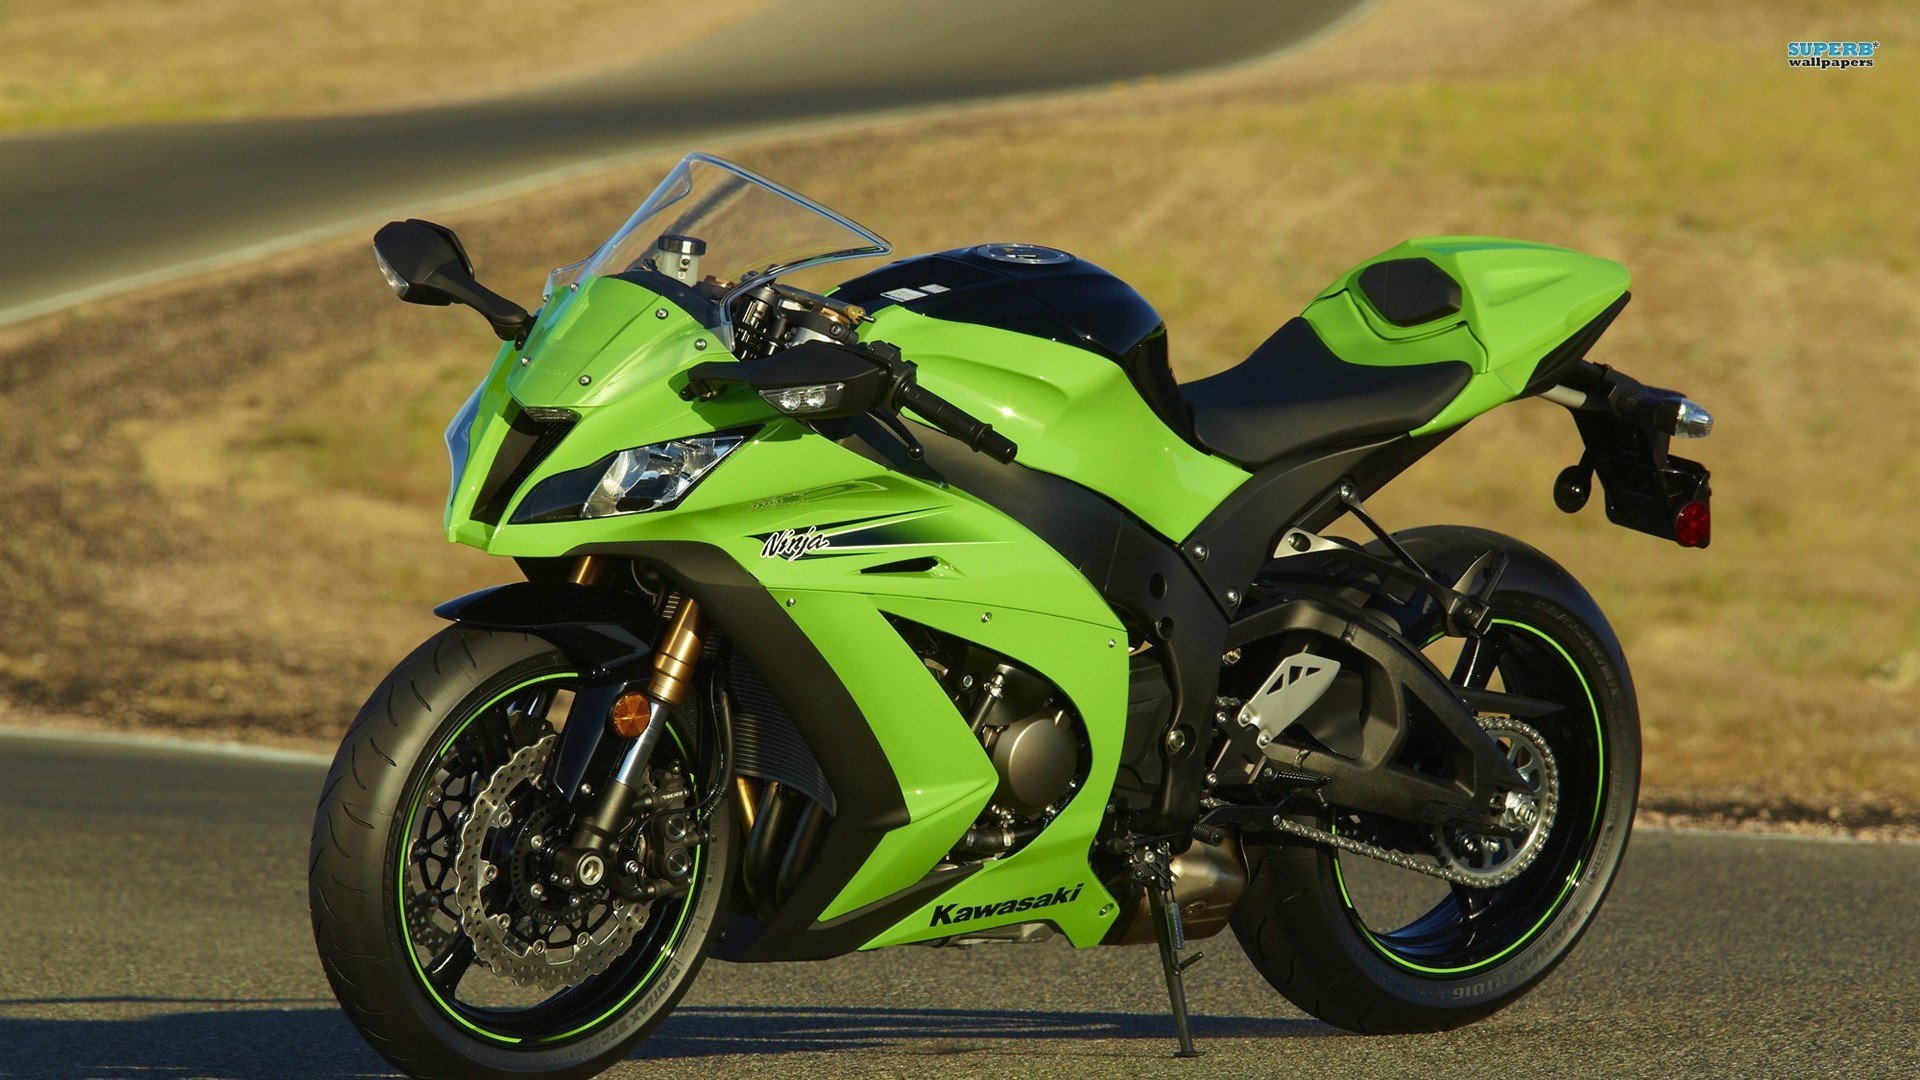 Kawasaki Ninja ZX 10R, Motorcycle, Green, Superbike Wallpaper